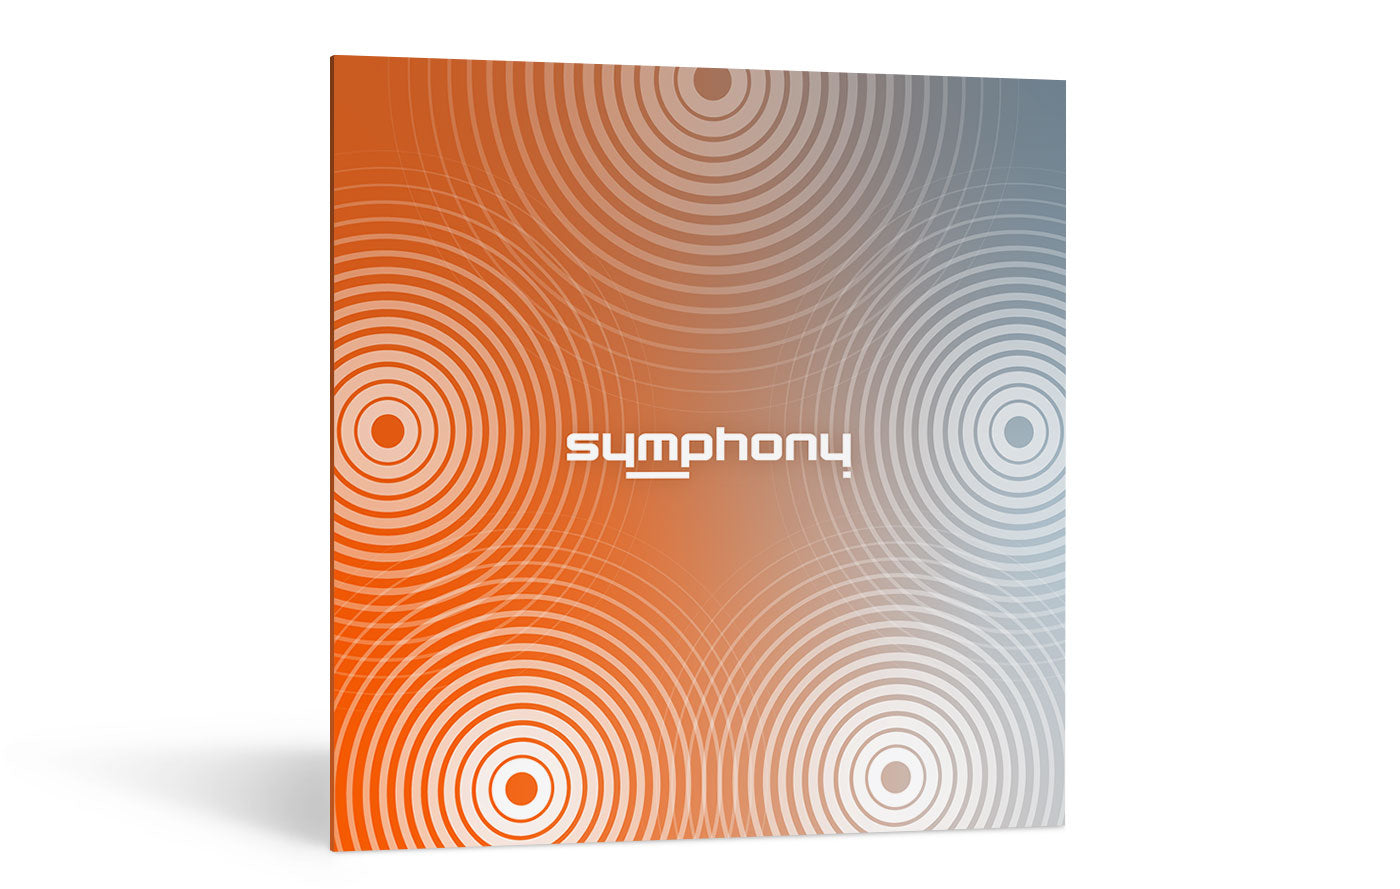 iZotope | Exponential Audio: Symphony